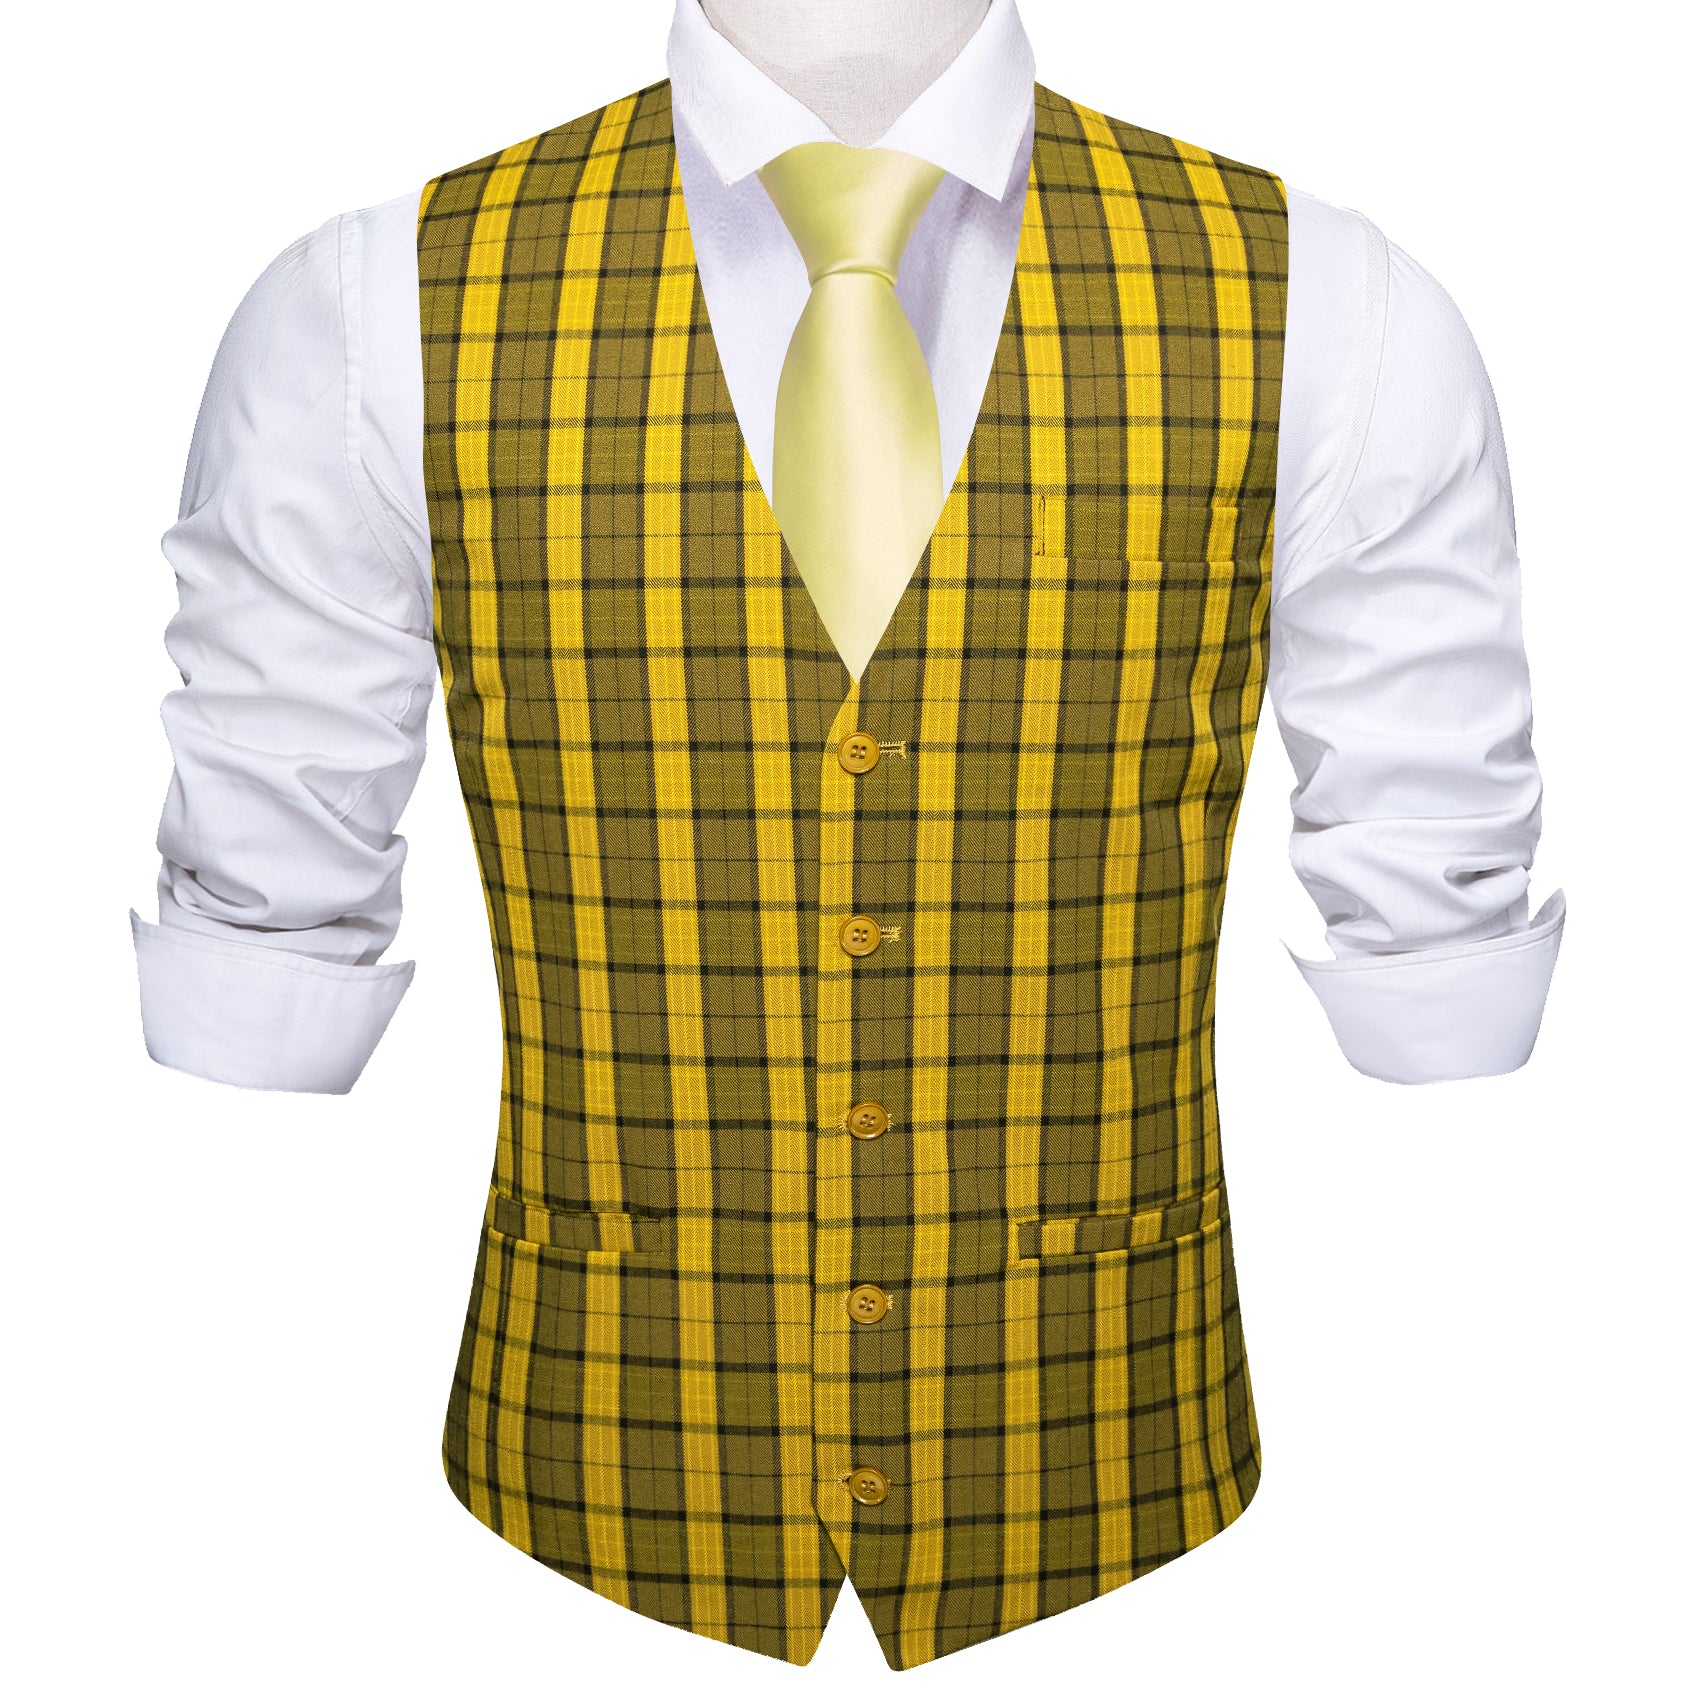 Barry.wang Luxury Green Yellow Plaid Waistcoat Vest